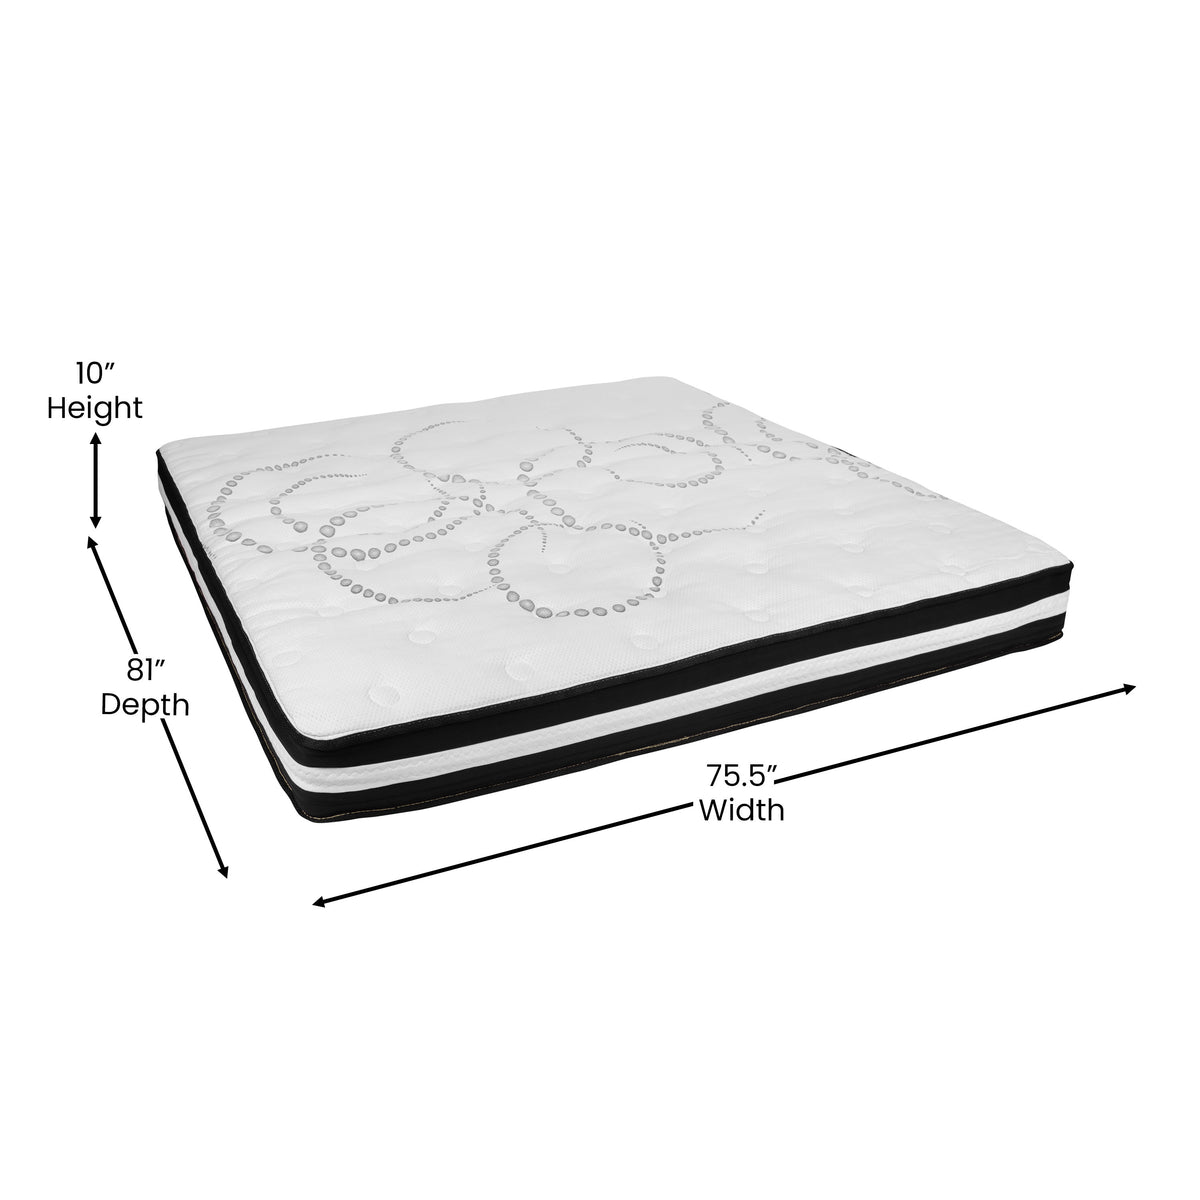 Beige,King |#| King Tufted Platform Bed in Beige Fabric with 10 Inch Pocket Spring Mattress